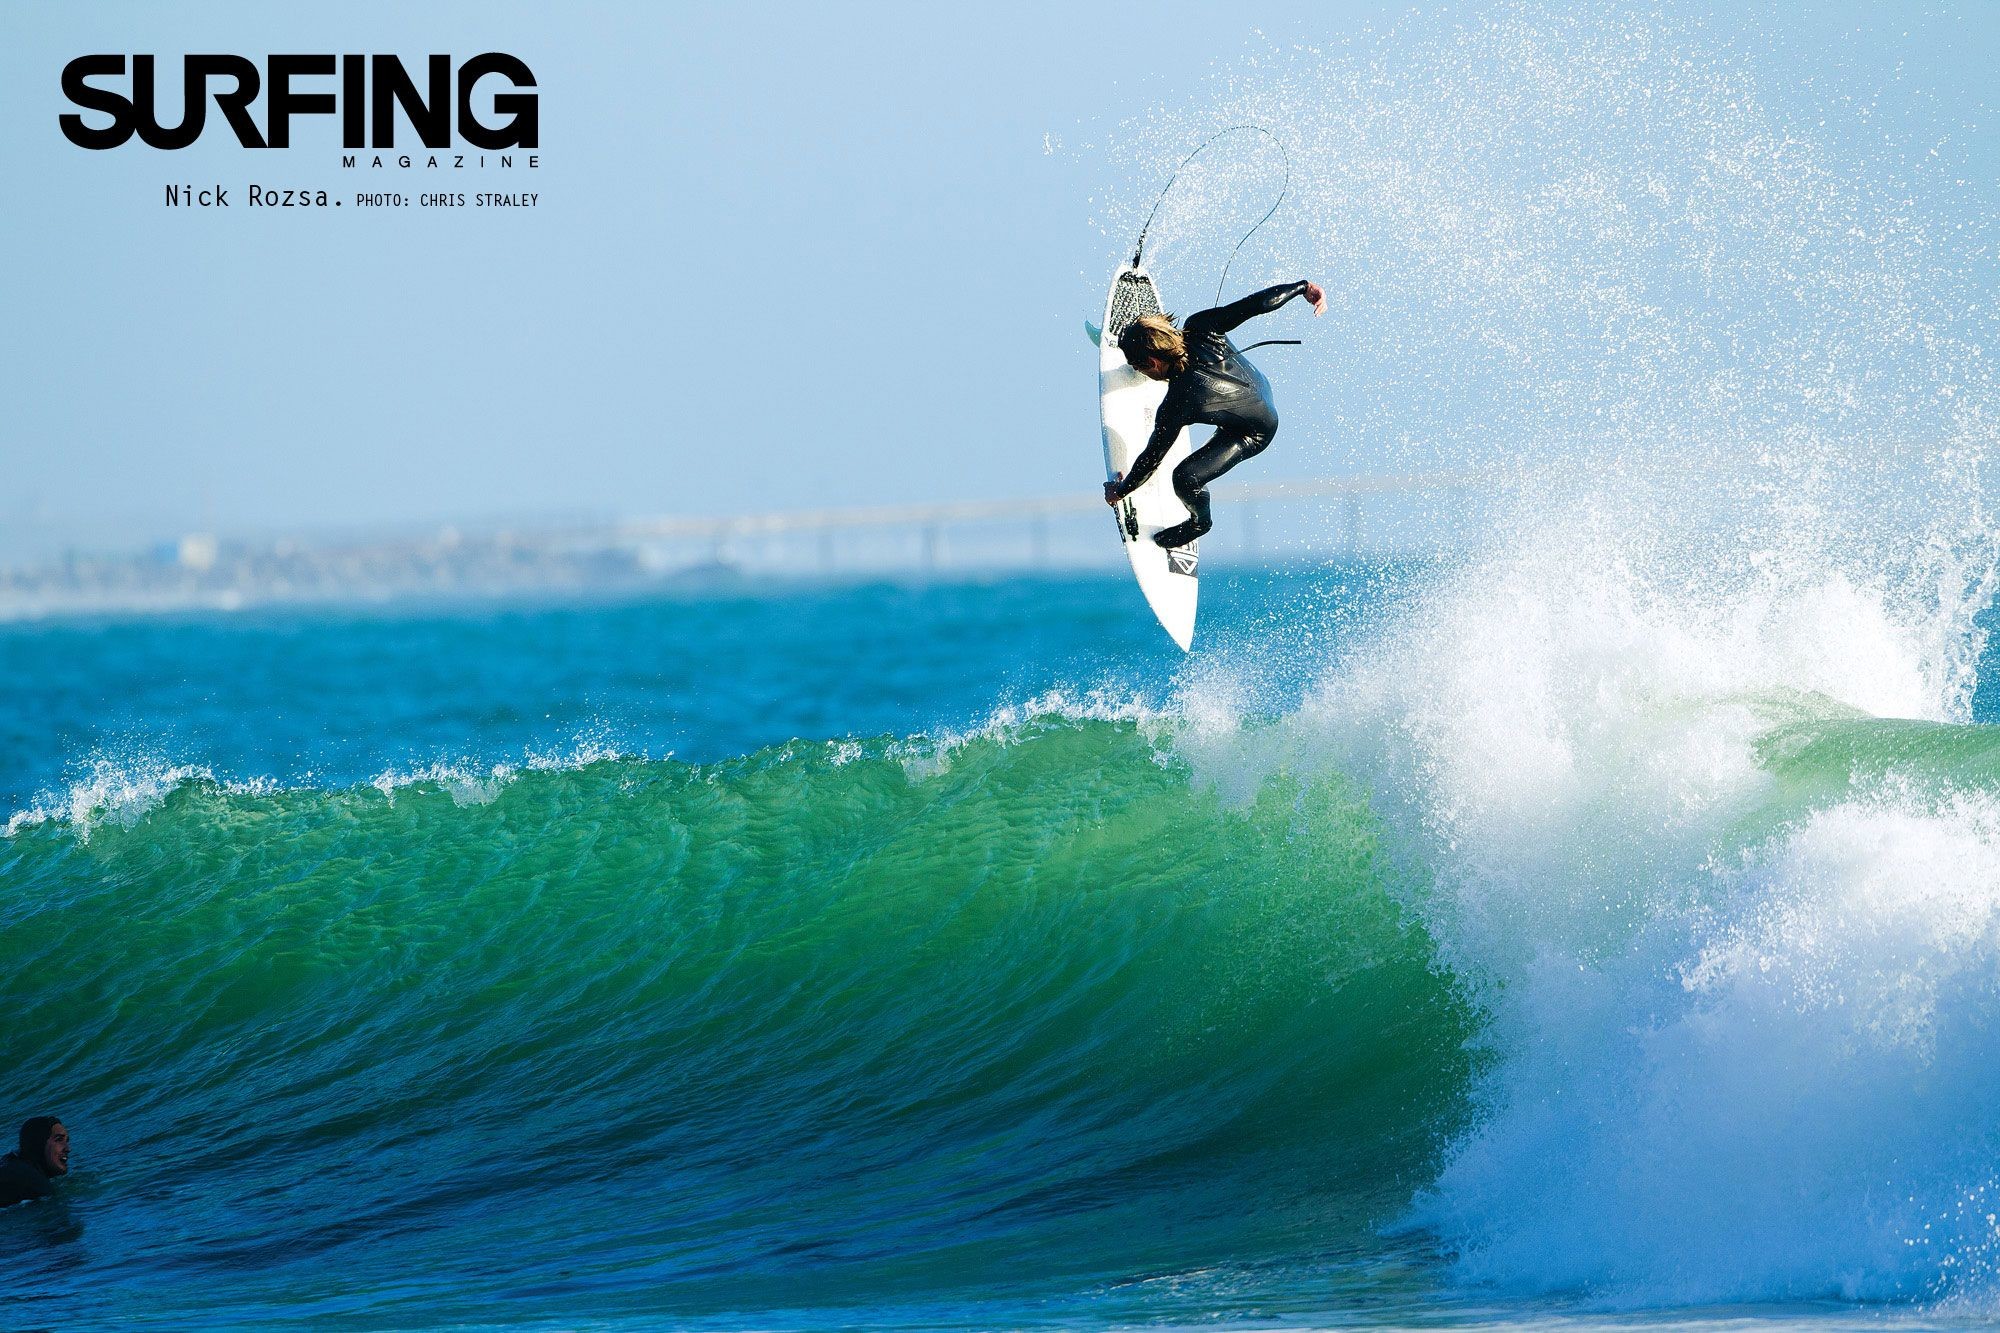 surfing-desktop-wallpaper-nick-rosza-chris-straley-surfing .